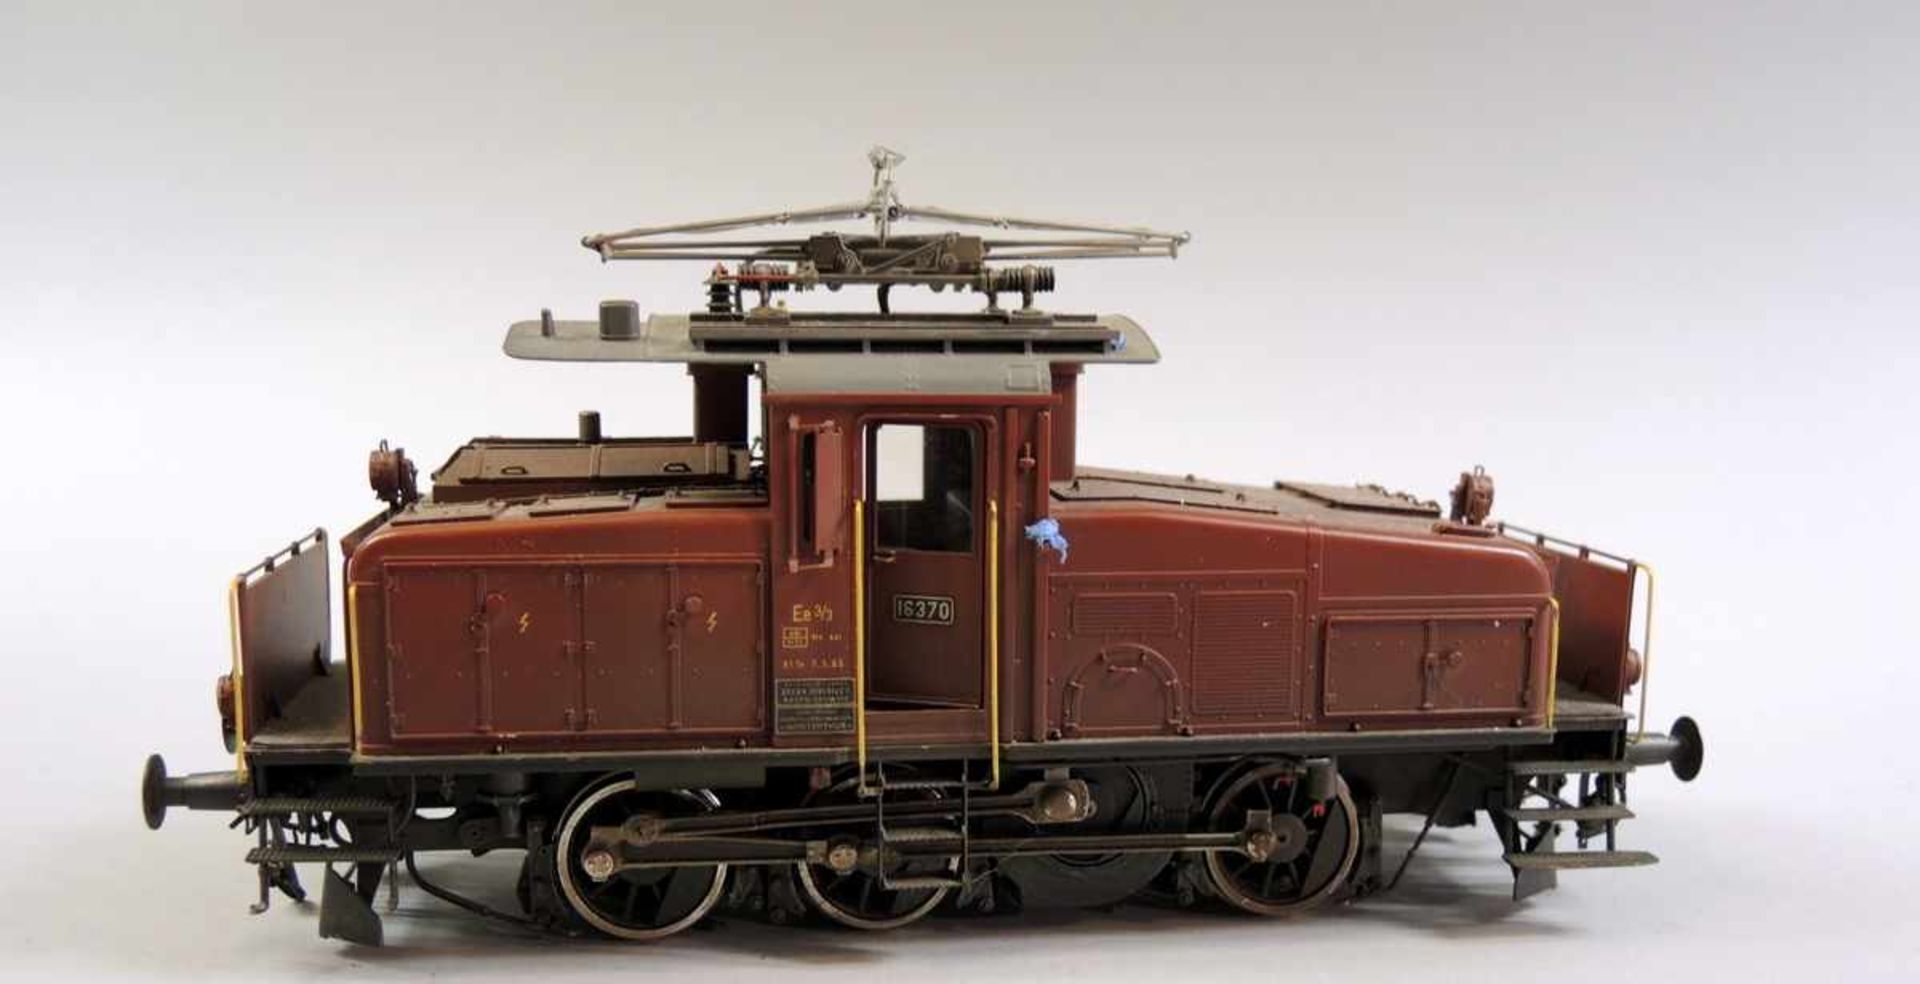 Fulgurex, Spur 0 Eisenbahnmodell, fein detalliert, rot/braun. Nummer Ee 3/3 16370. Originaler